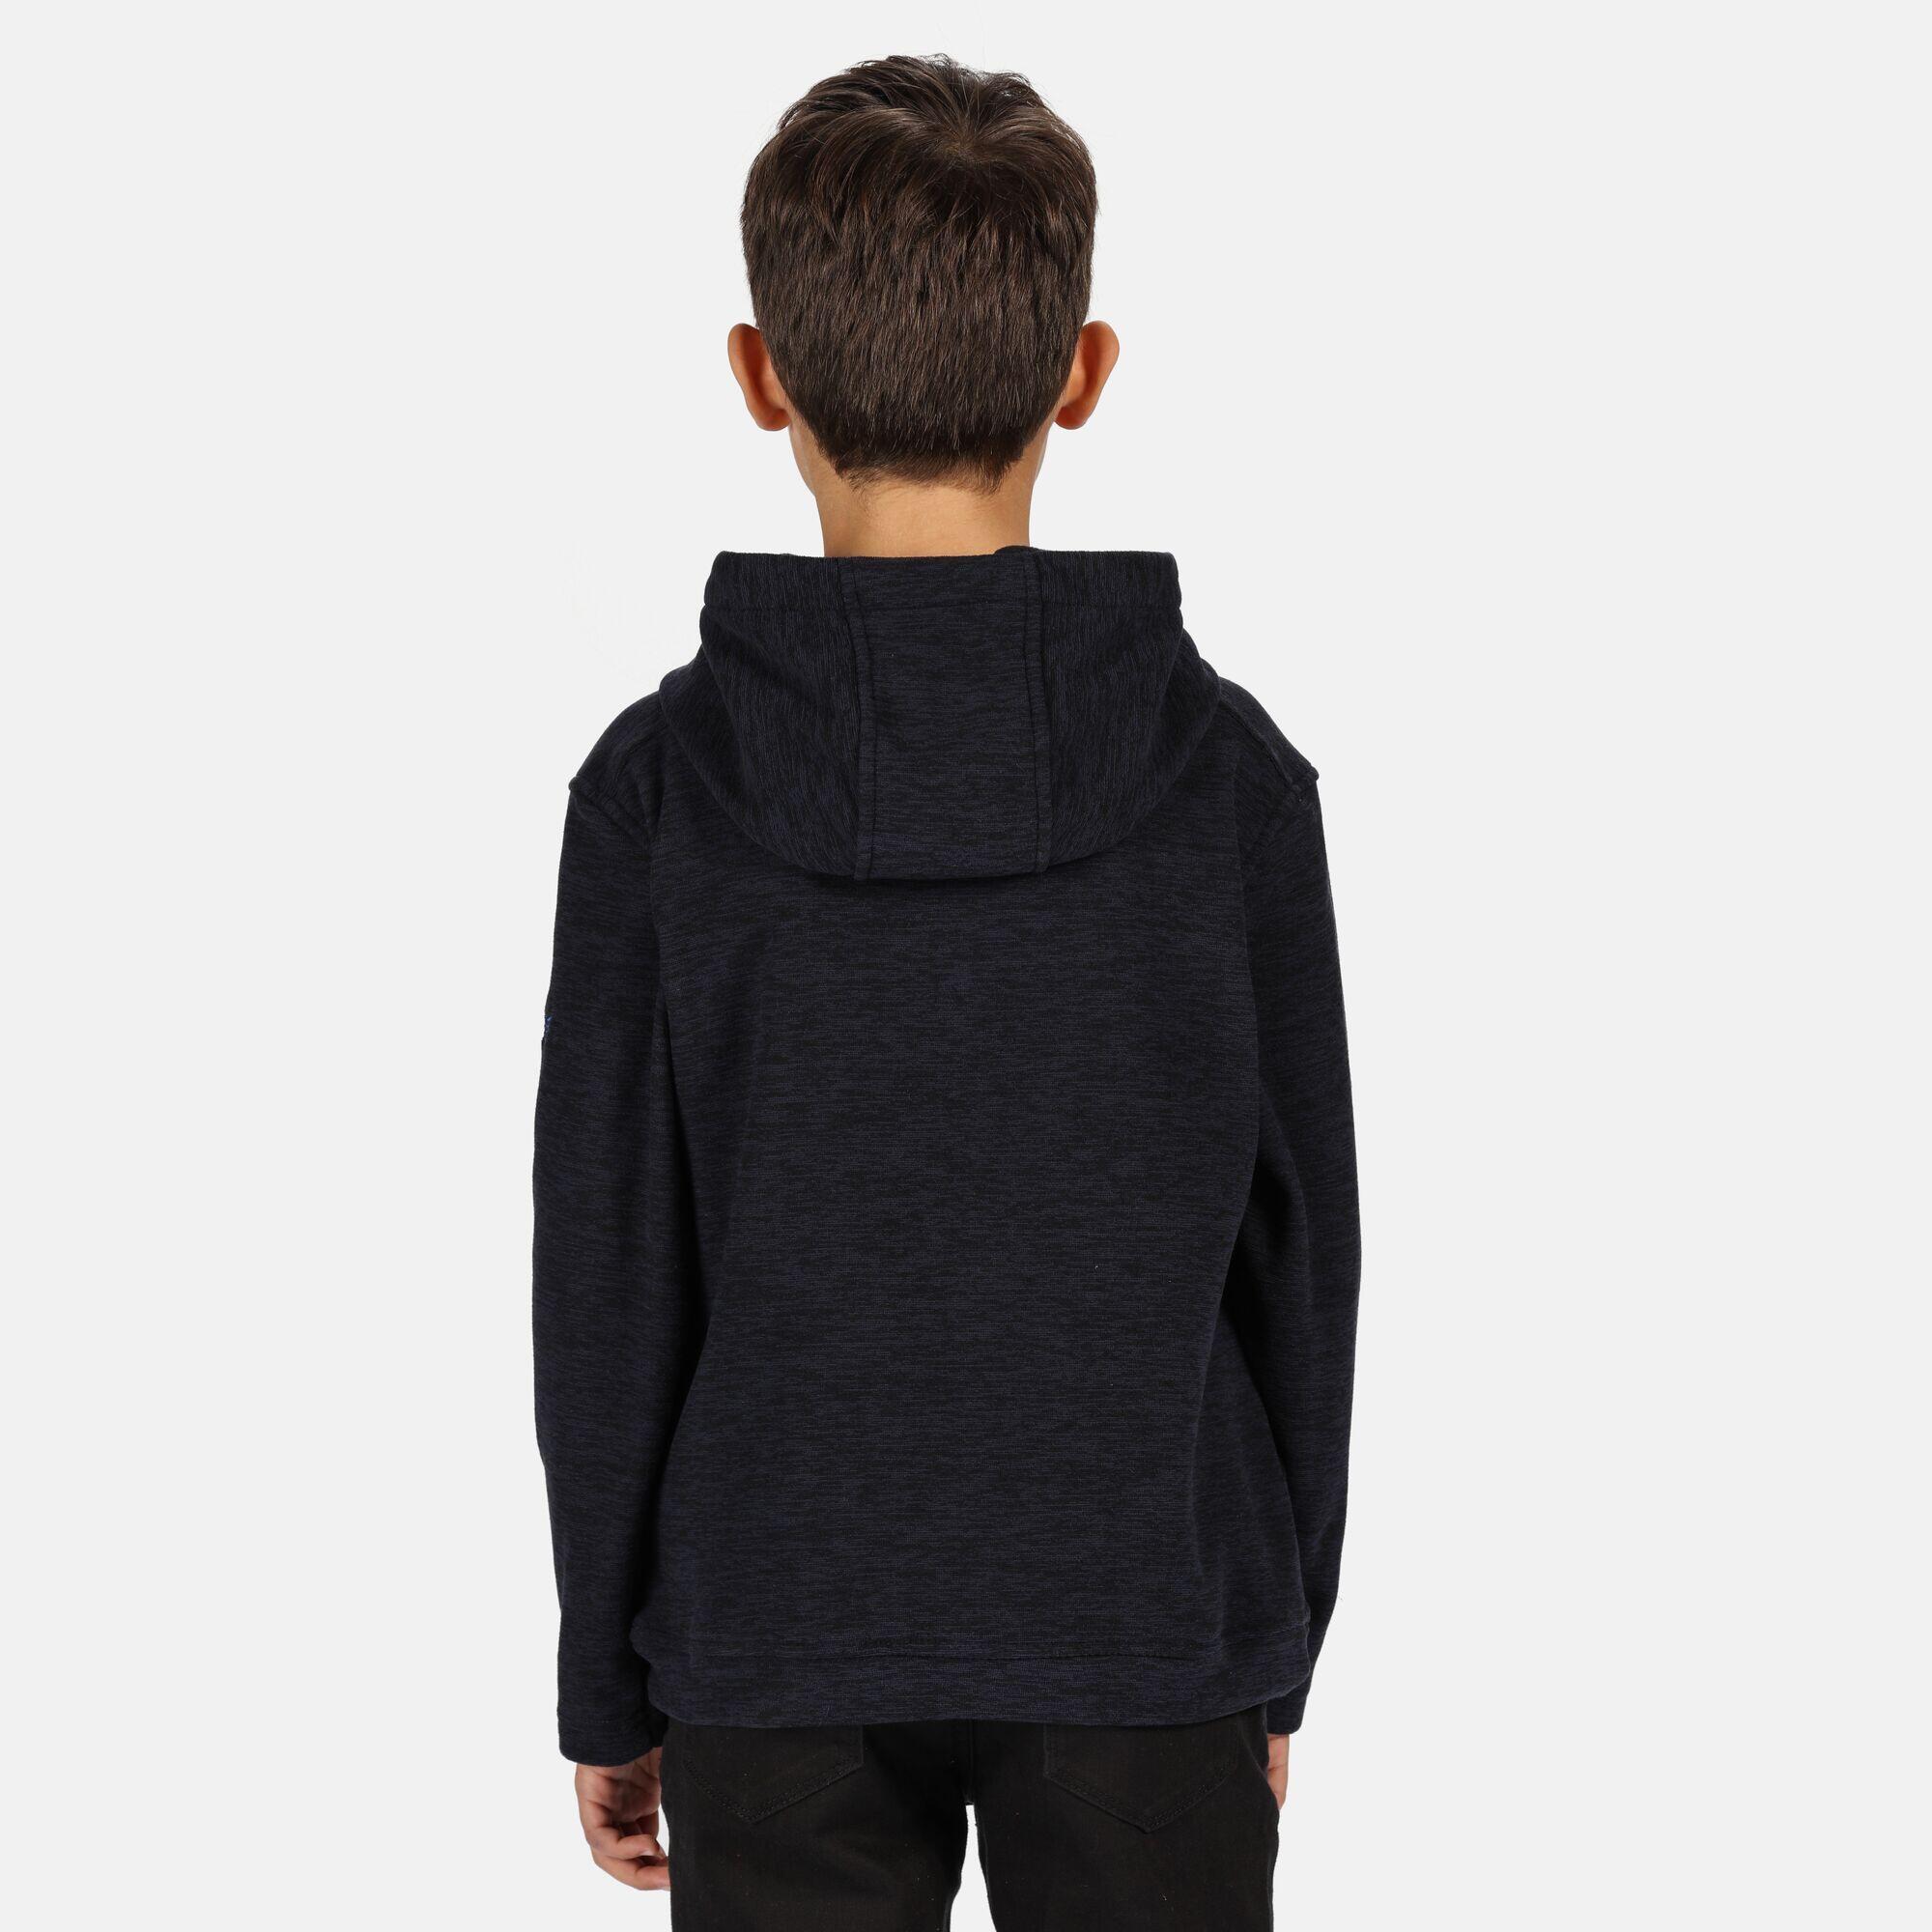 Childrens/Kids Keyon Hooded Fleece (Navy/Black) 4/5